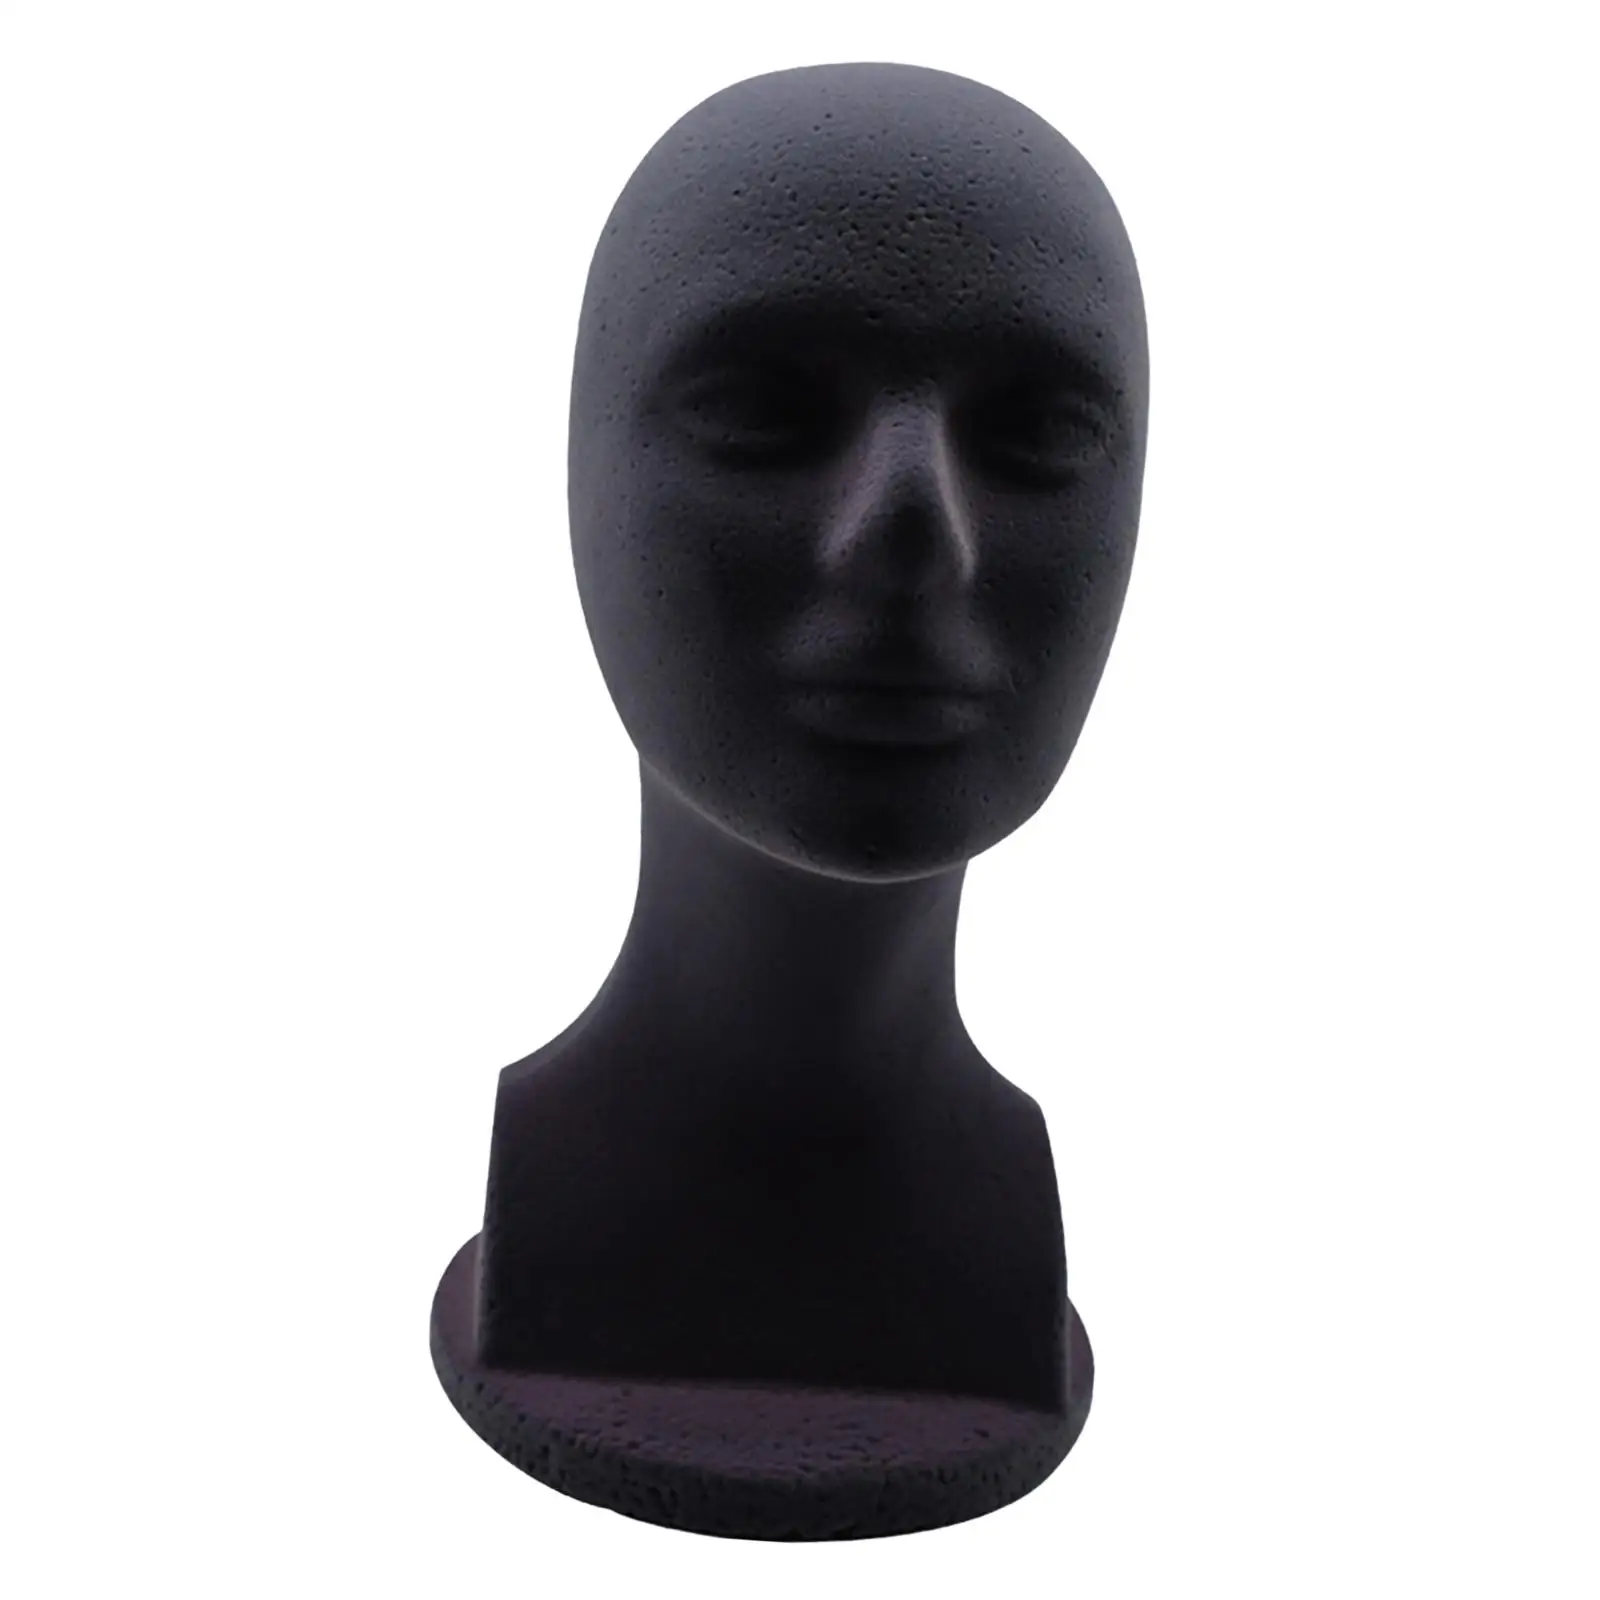 Man Styrofoam Mannequin Head Model Hat Display Stand Black Lightweight Yet Sturdy Portable DIY 12.6 inch Tall Stable Base